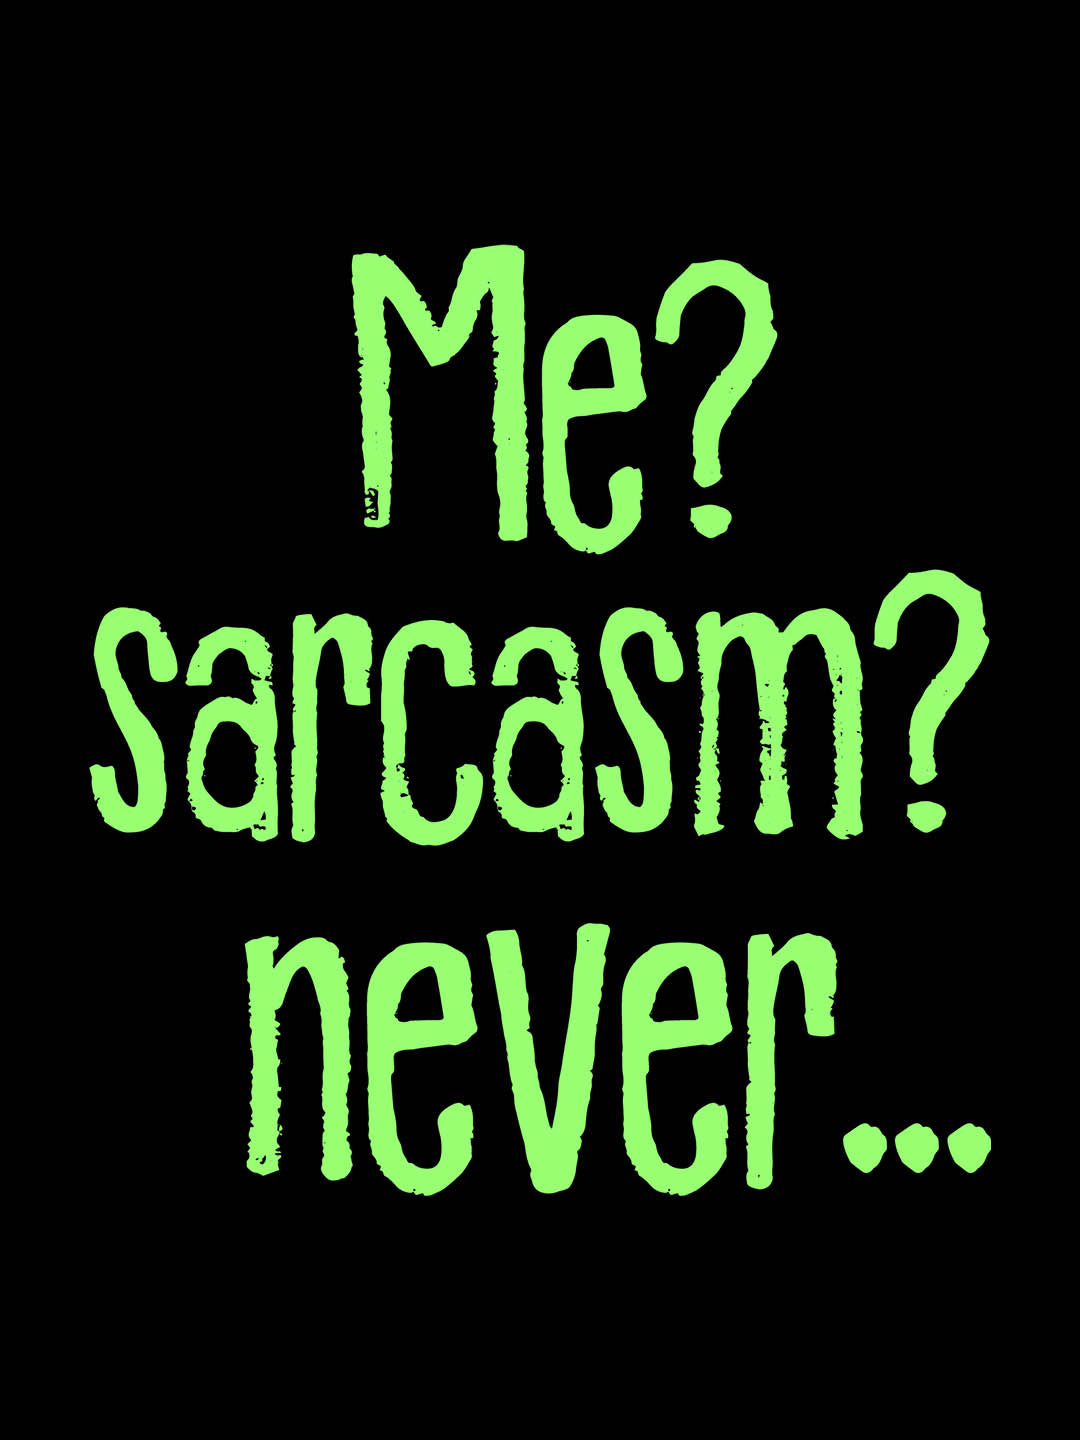 Me Sarcasm Never Black T-Shirt